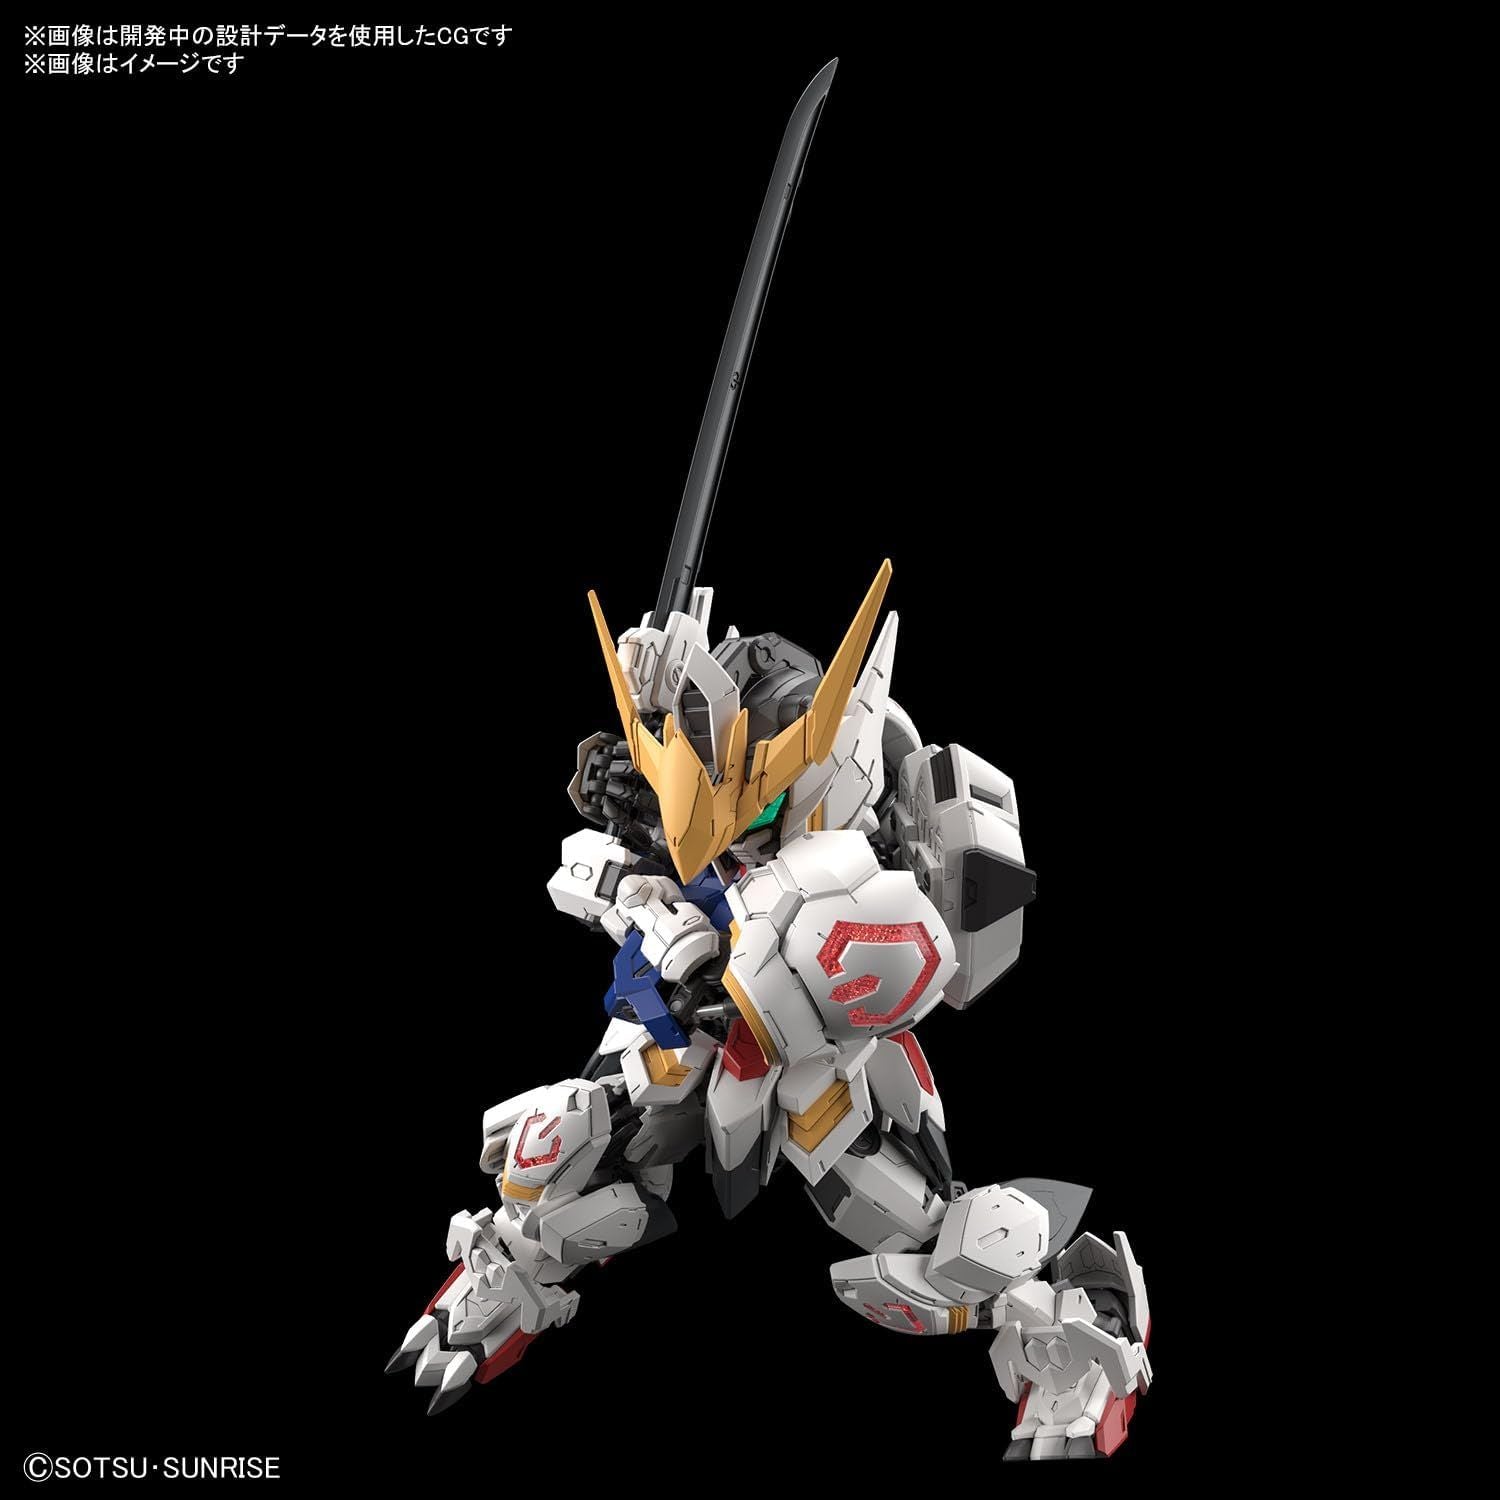 Bandai MGSD Mobile Suit Gundam Barbatos - BanzaiHobby